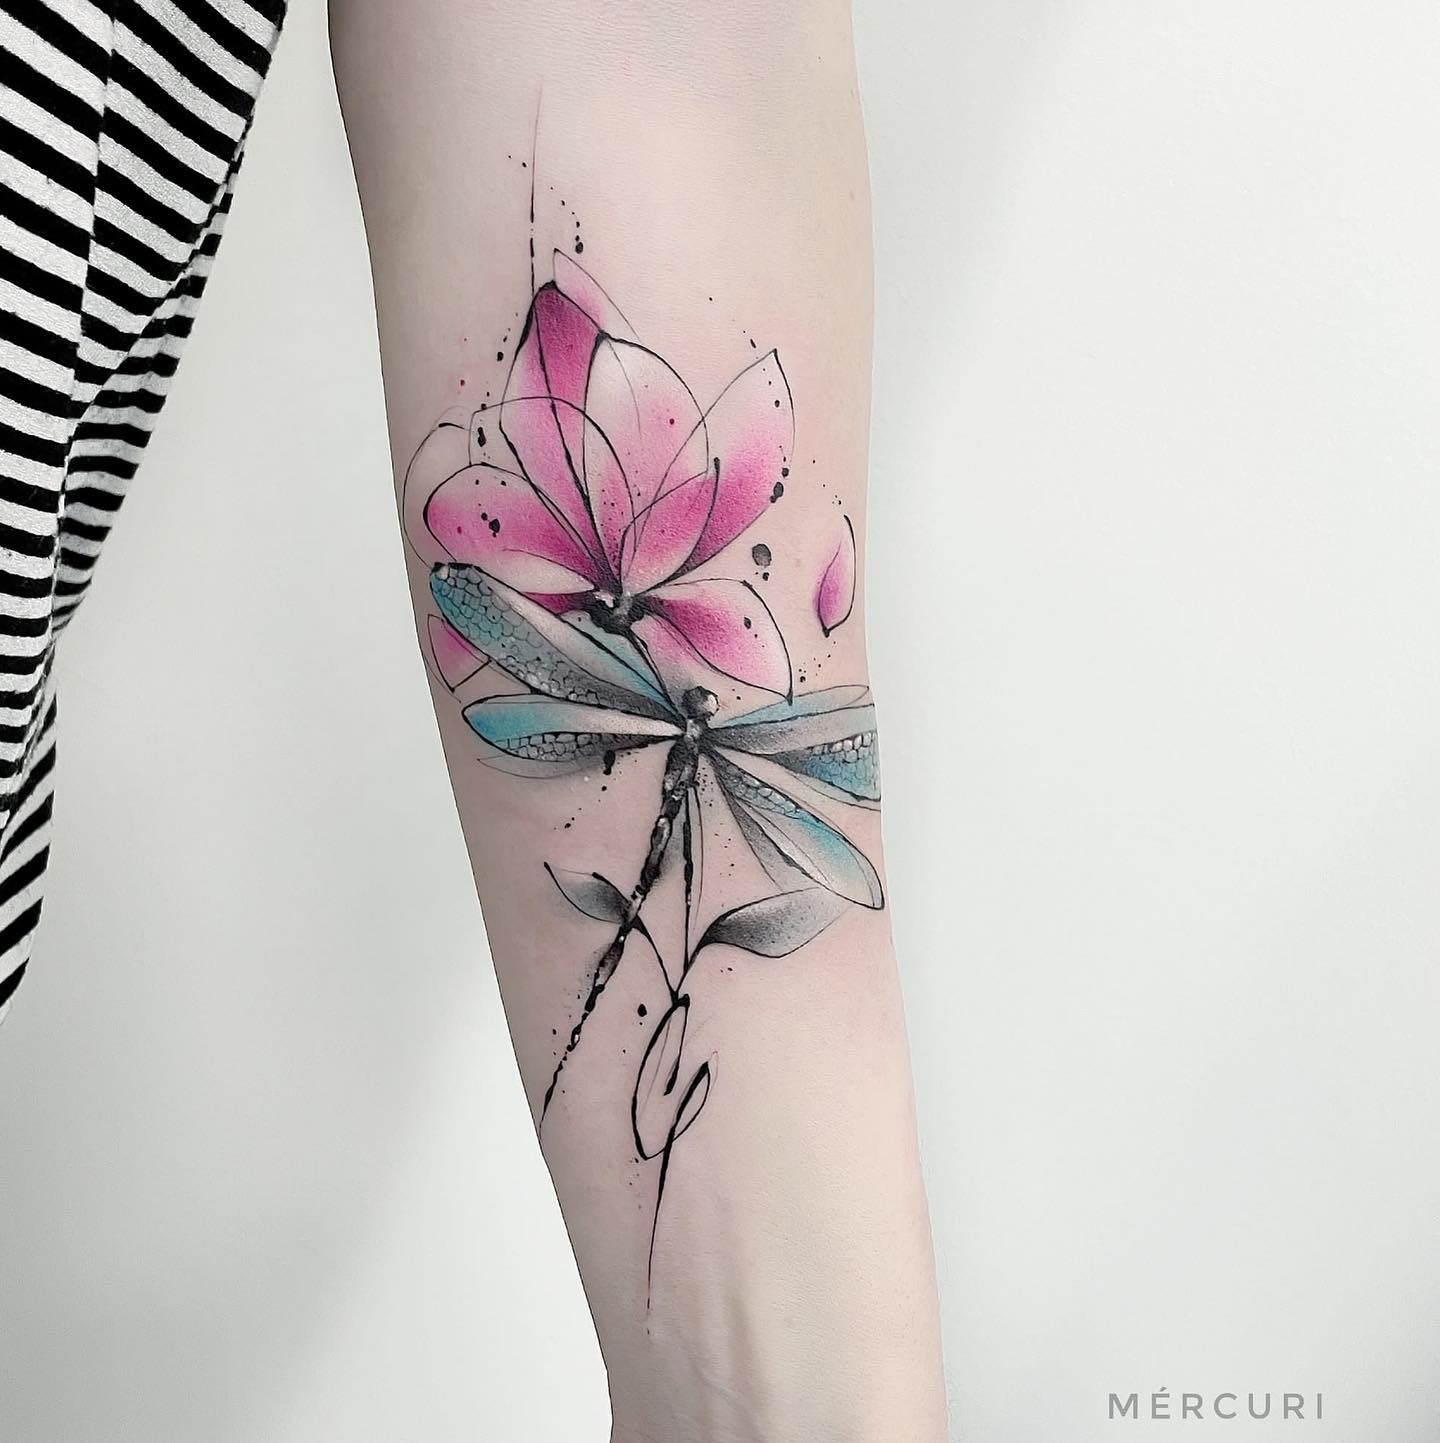 watercolor tattoo on forearm by mercuri michele